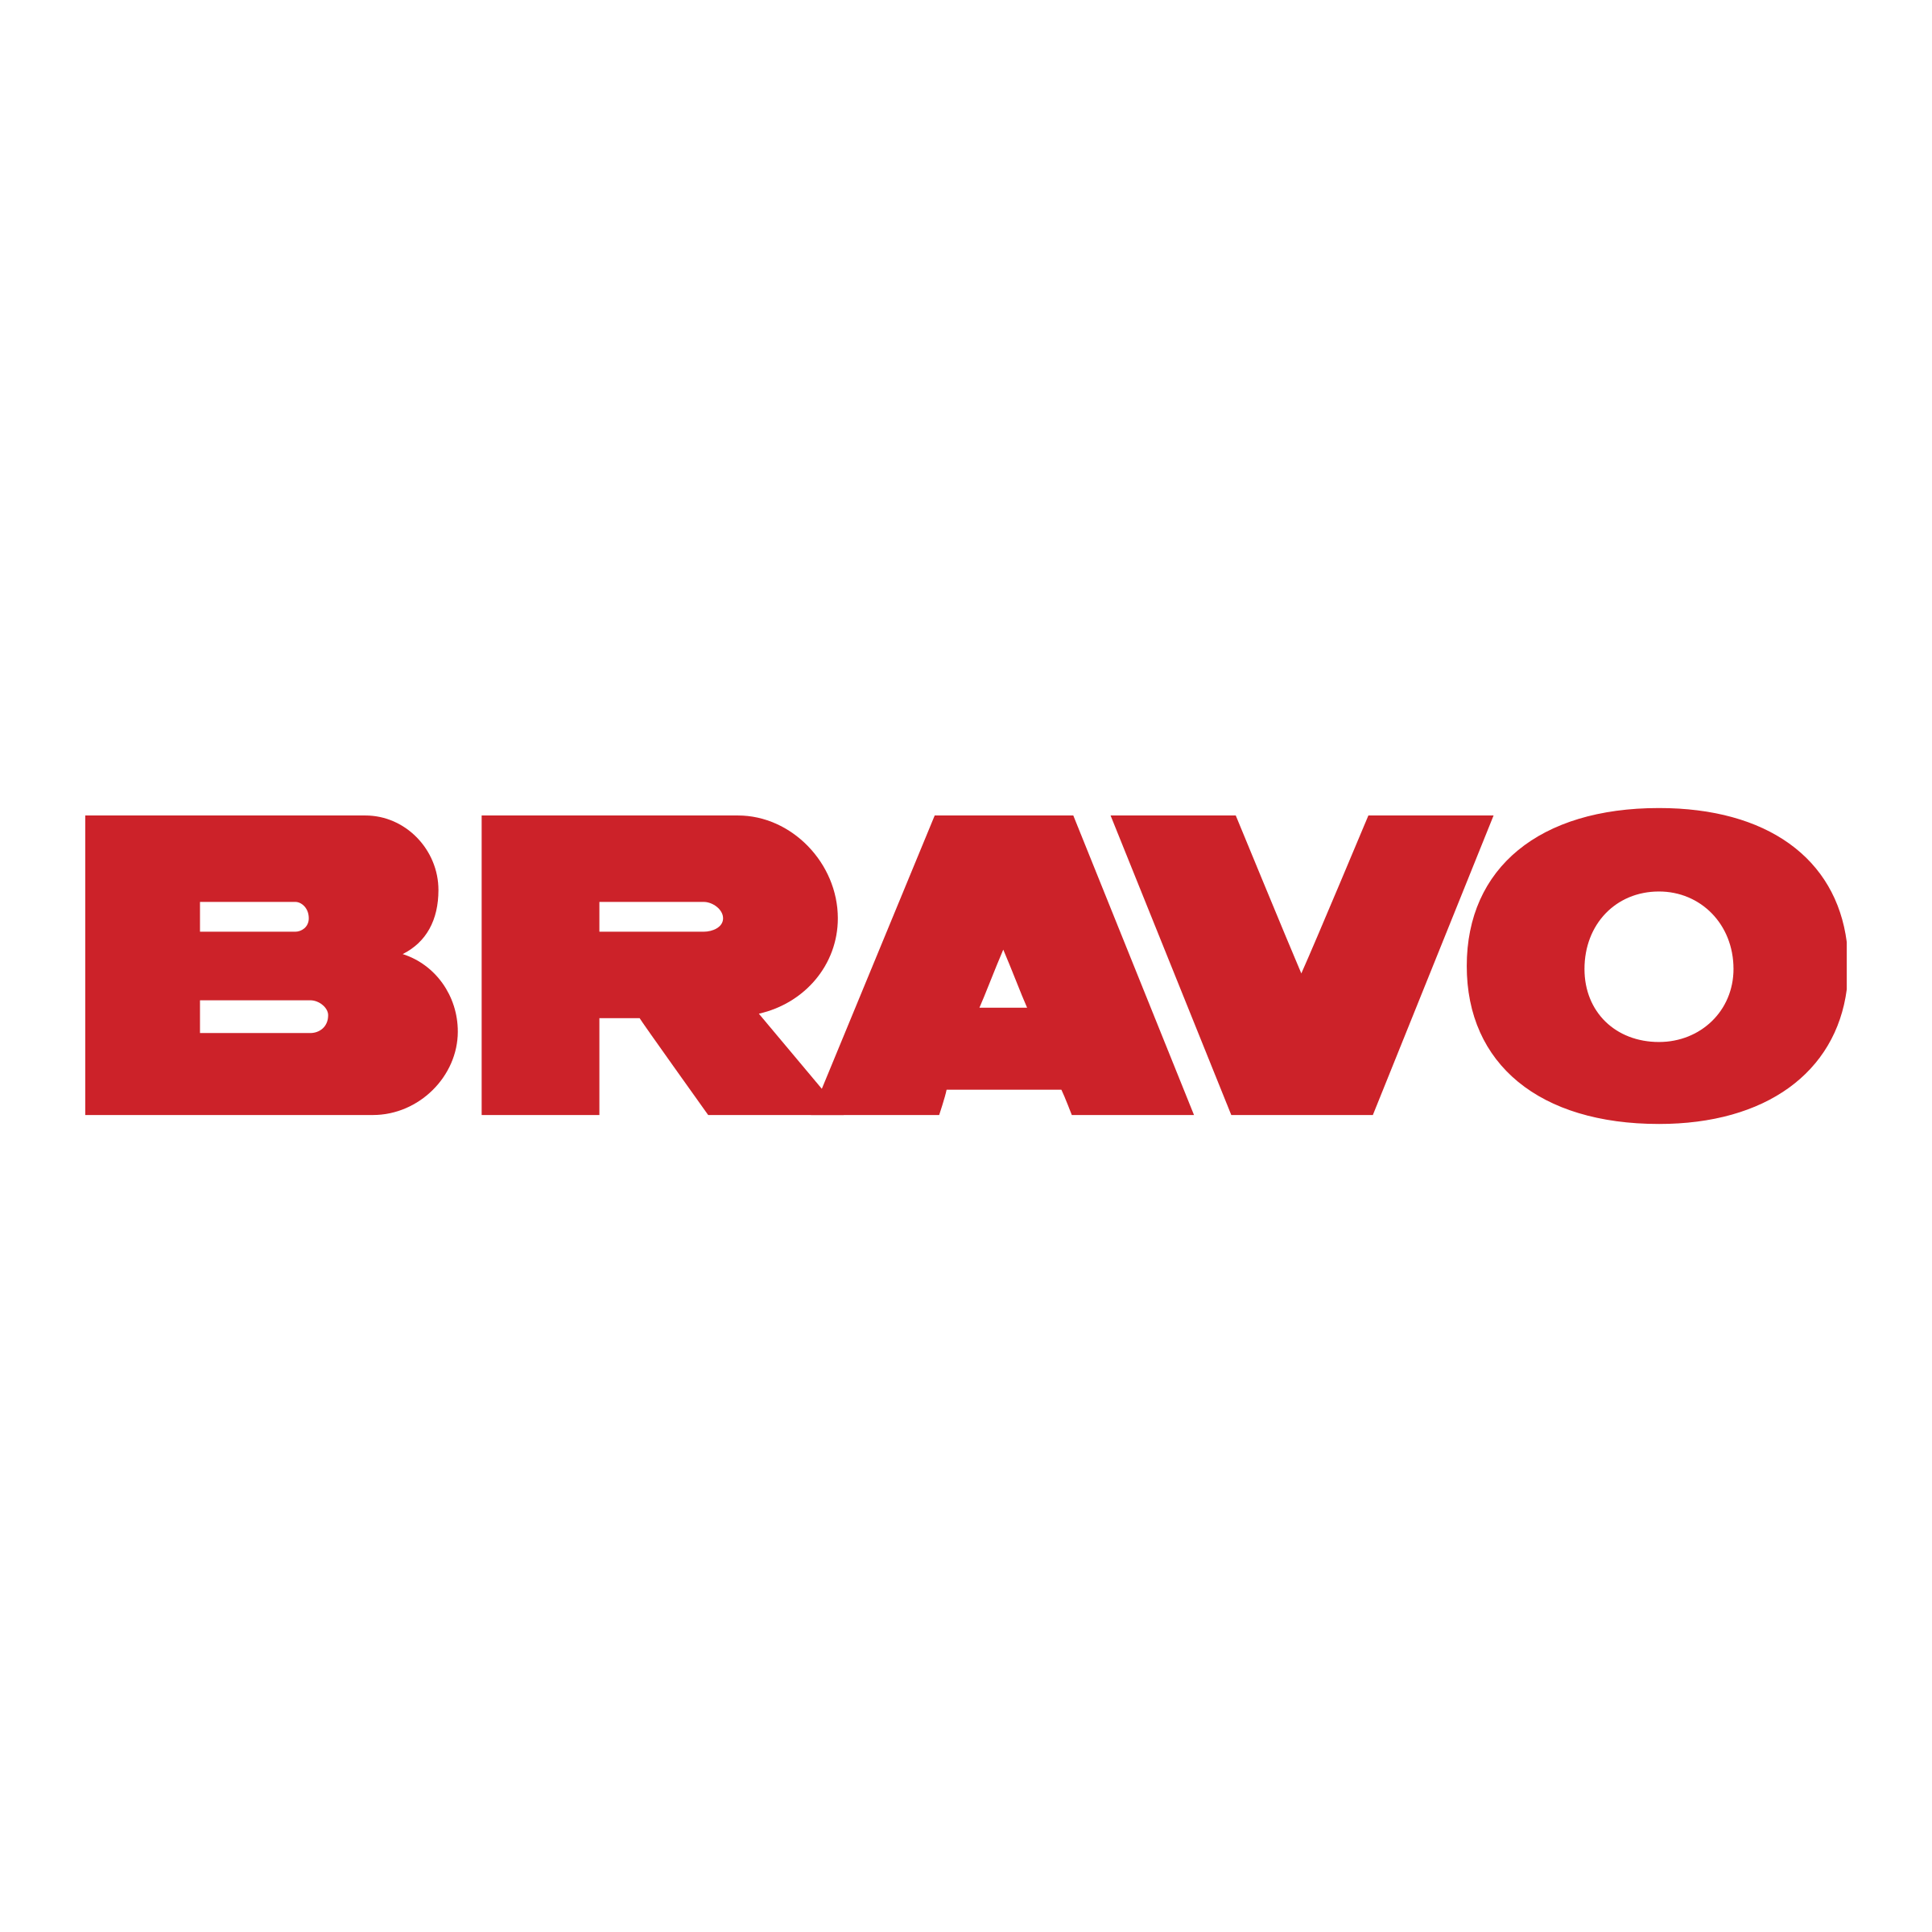 Bravo Logo - Bravo Logo PNG Transparent & SVG Vector - Freebie Supply